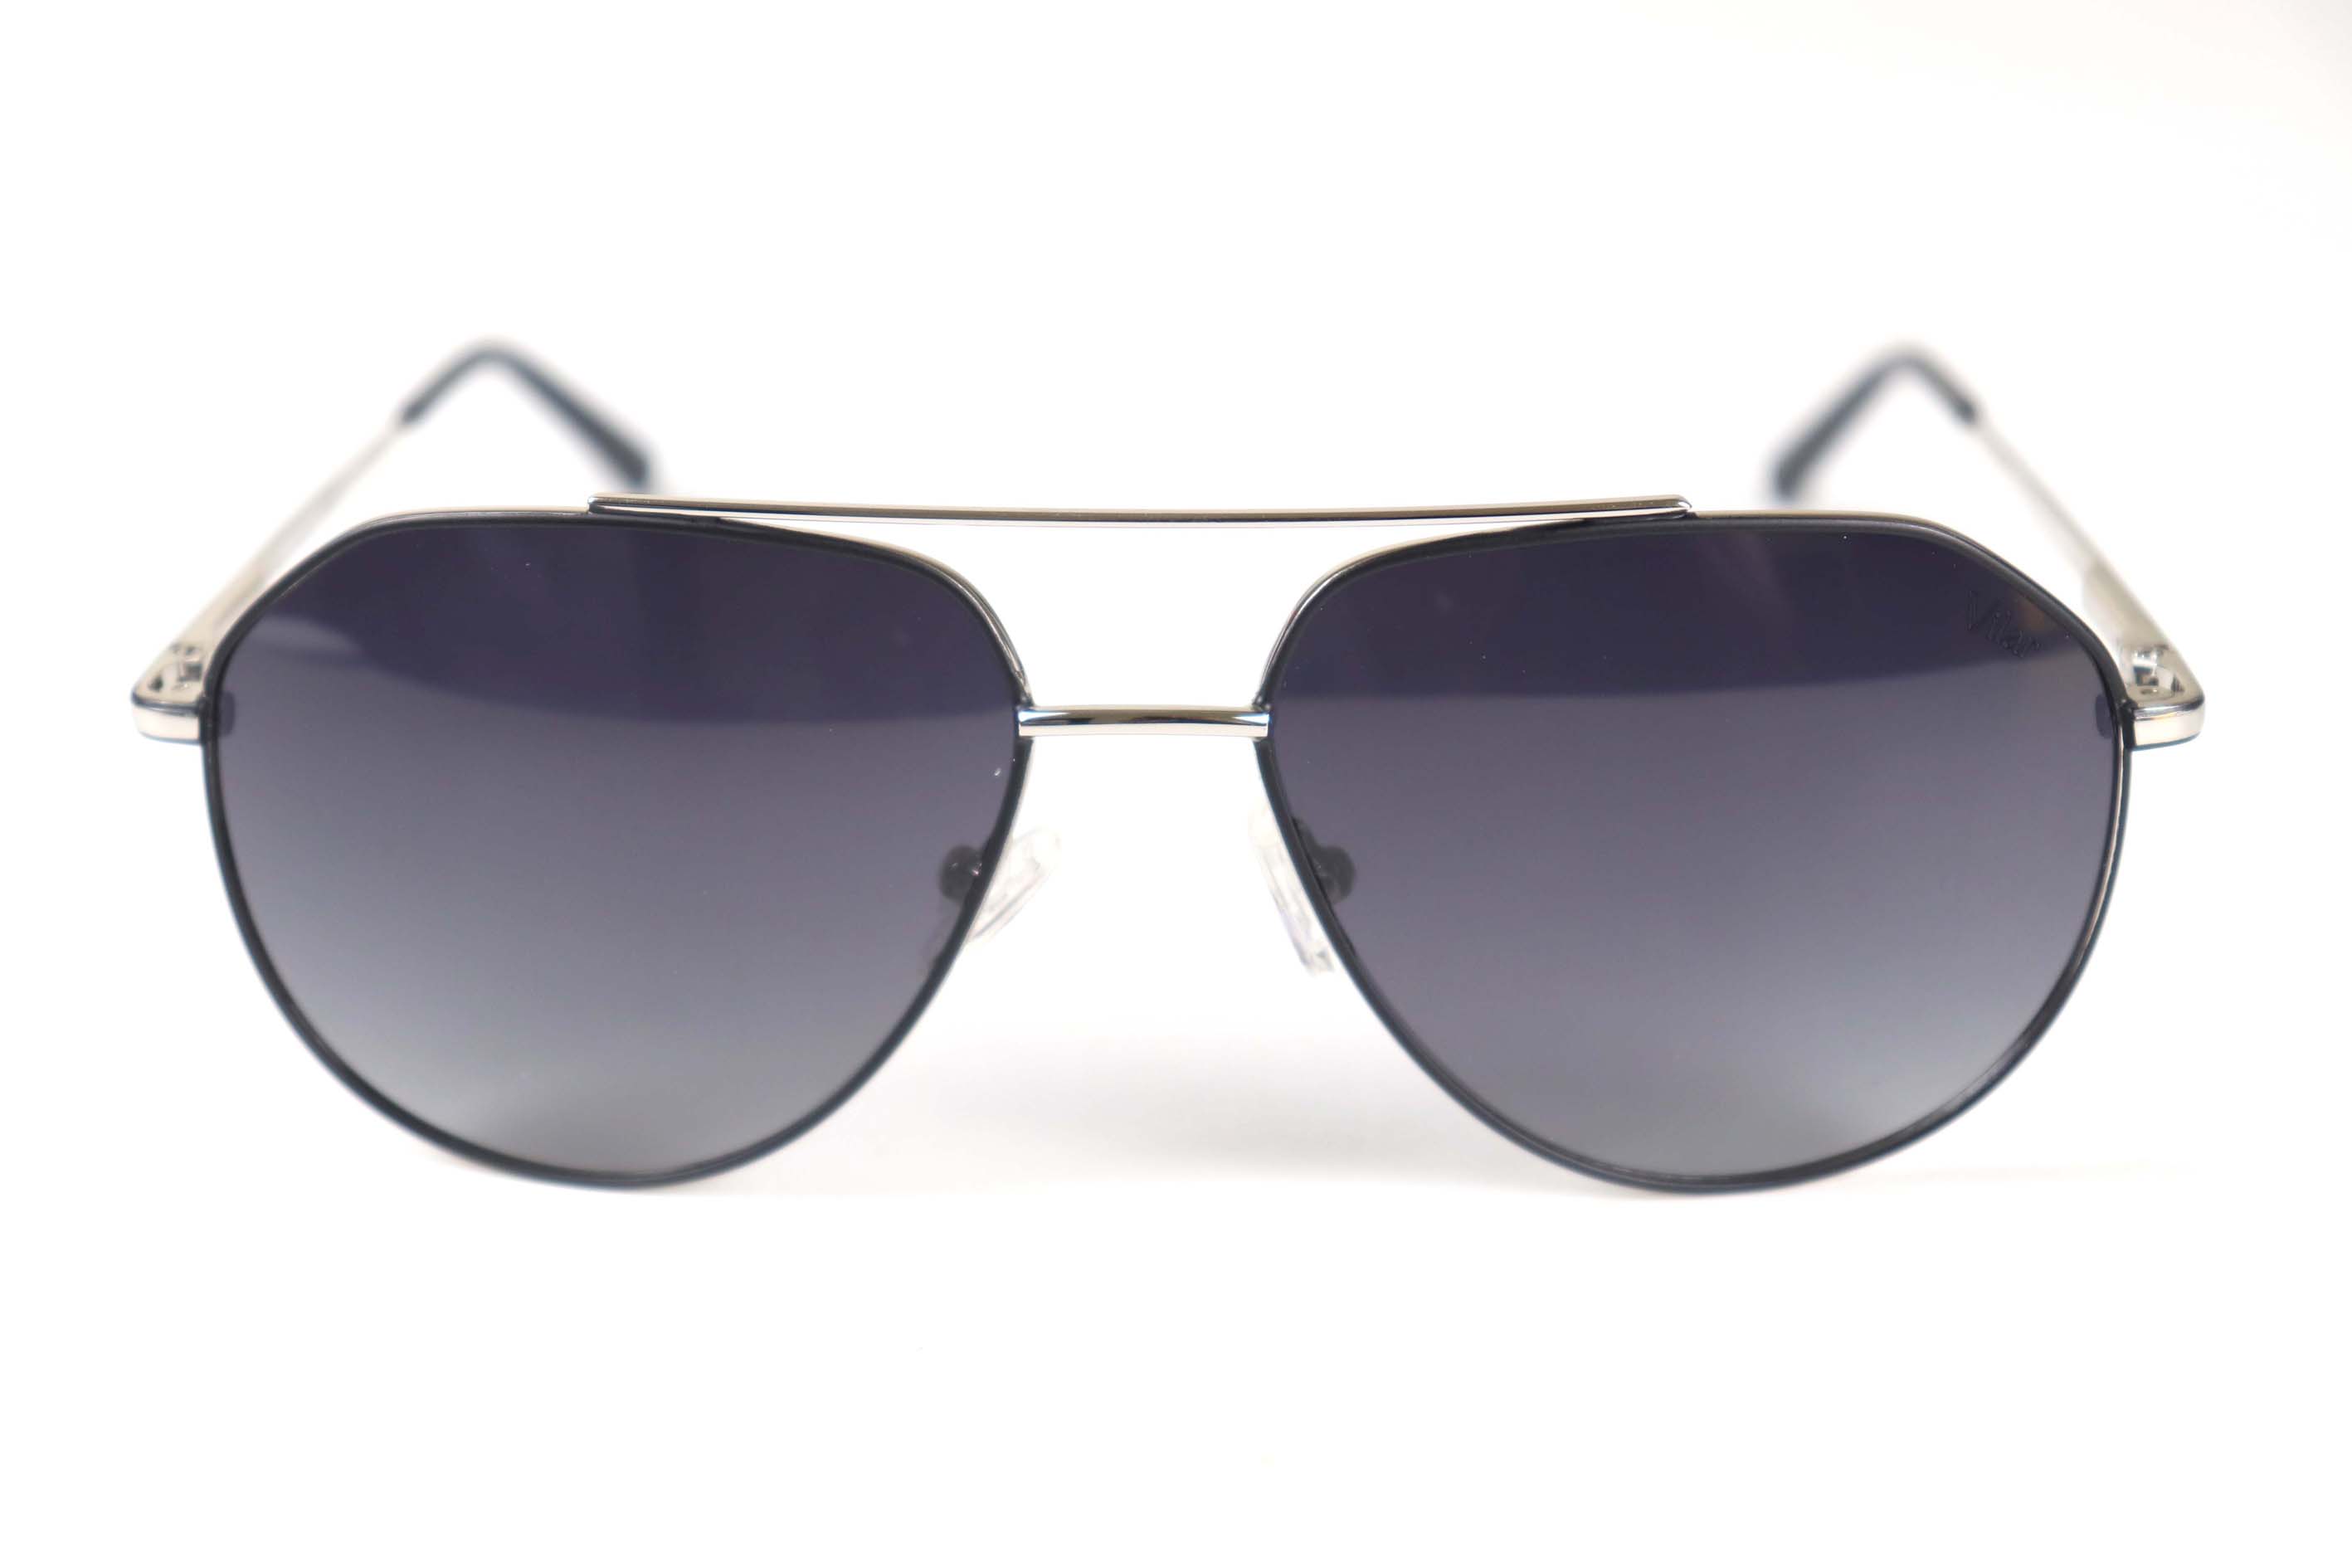  Vilar Sunglasses-OR-GSA7037-C4-S